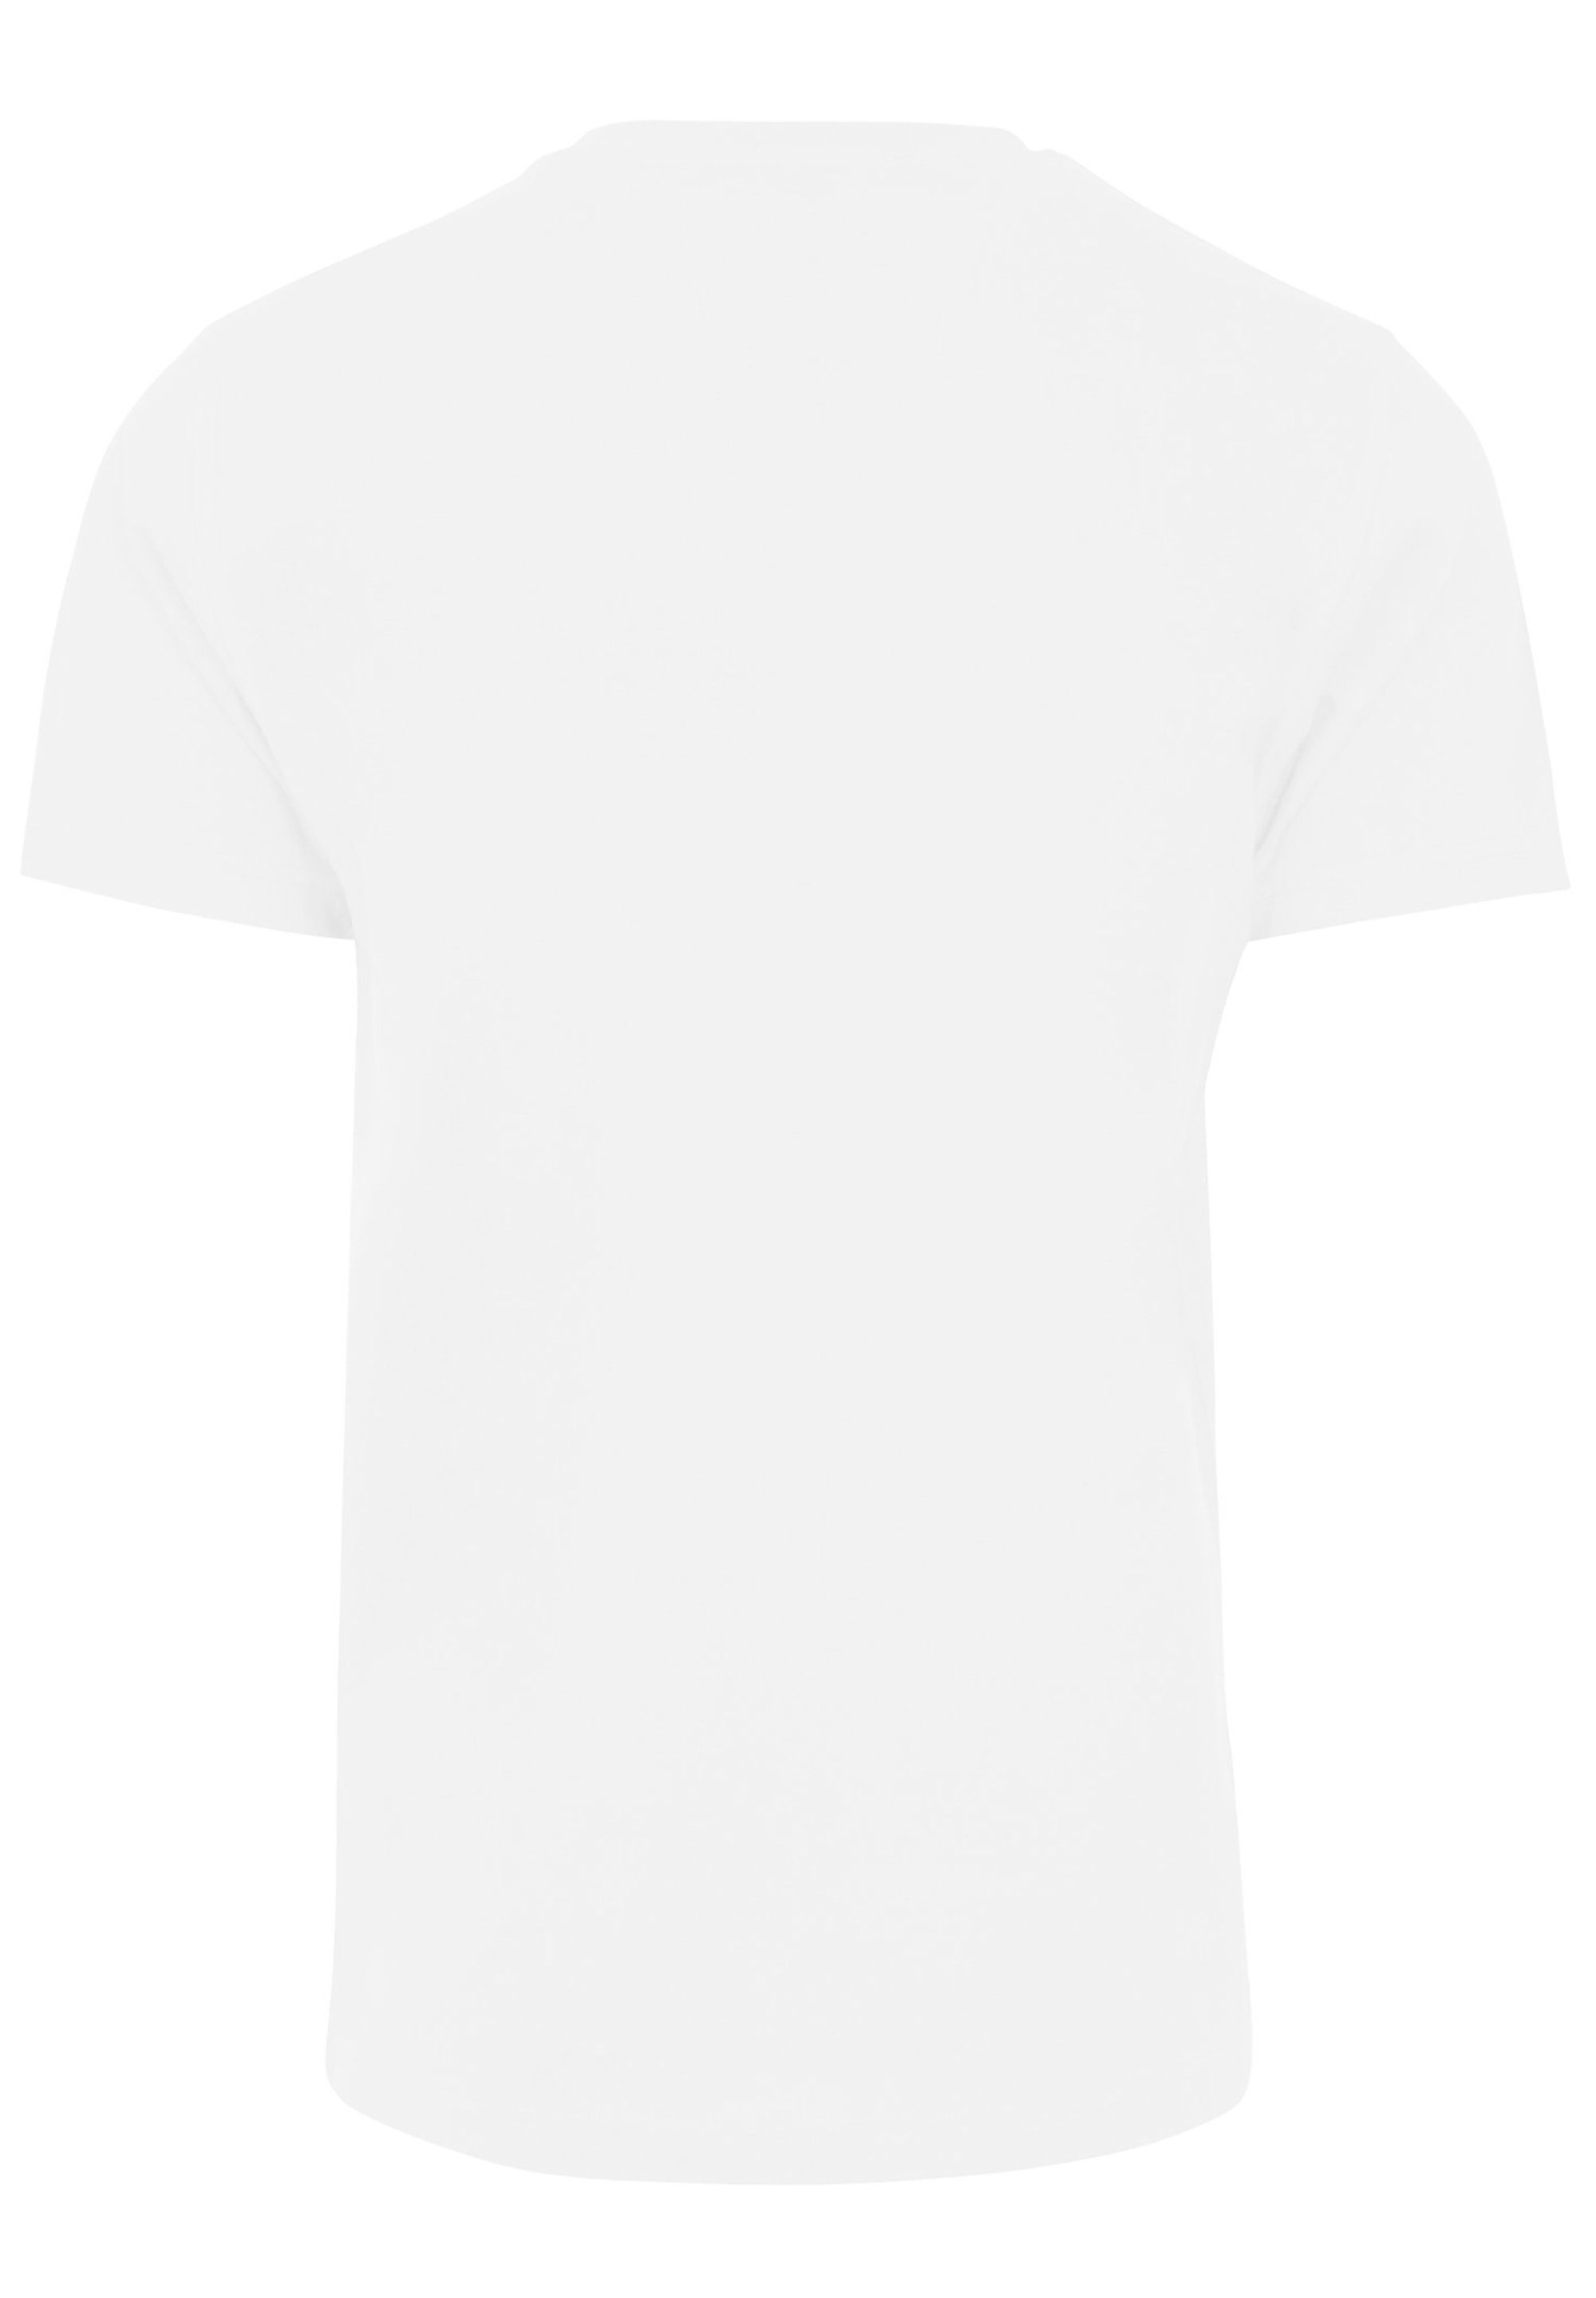 F4NT4STIC T-Shirt F4NT4STIC T-Shirt Herren,Premium Merch,Regular-Fit,Basic,Bedruckt